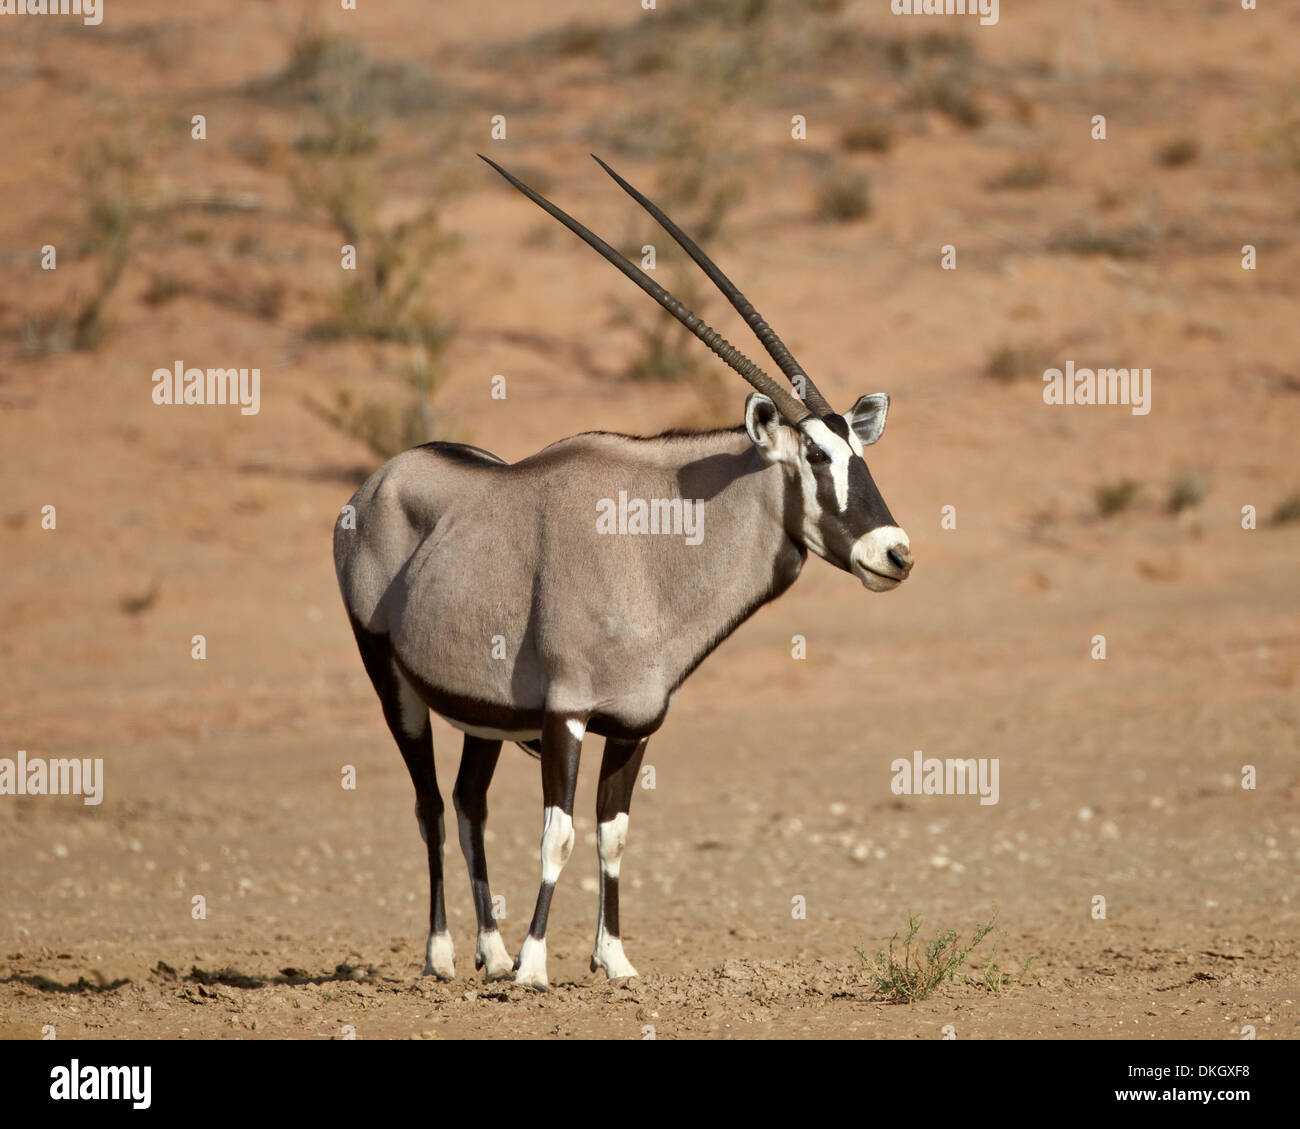 Gemsbok (Oryx gazella), Kgalagadi Transfrontier Park, (l'ancien parc national de Kalahari Gemsbok), Afrique du Sud, l'Afrique Banque D'Images